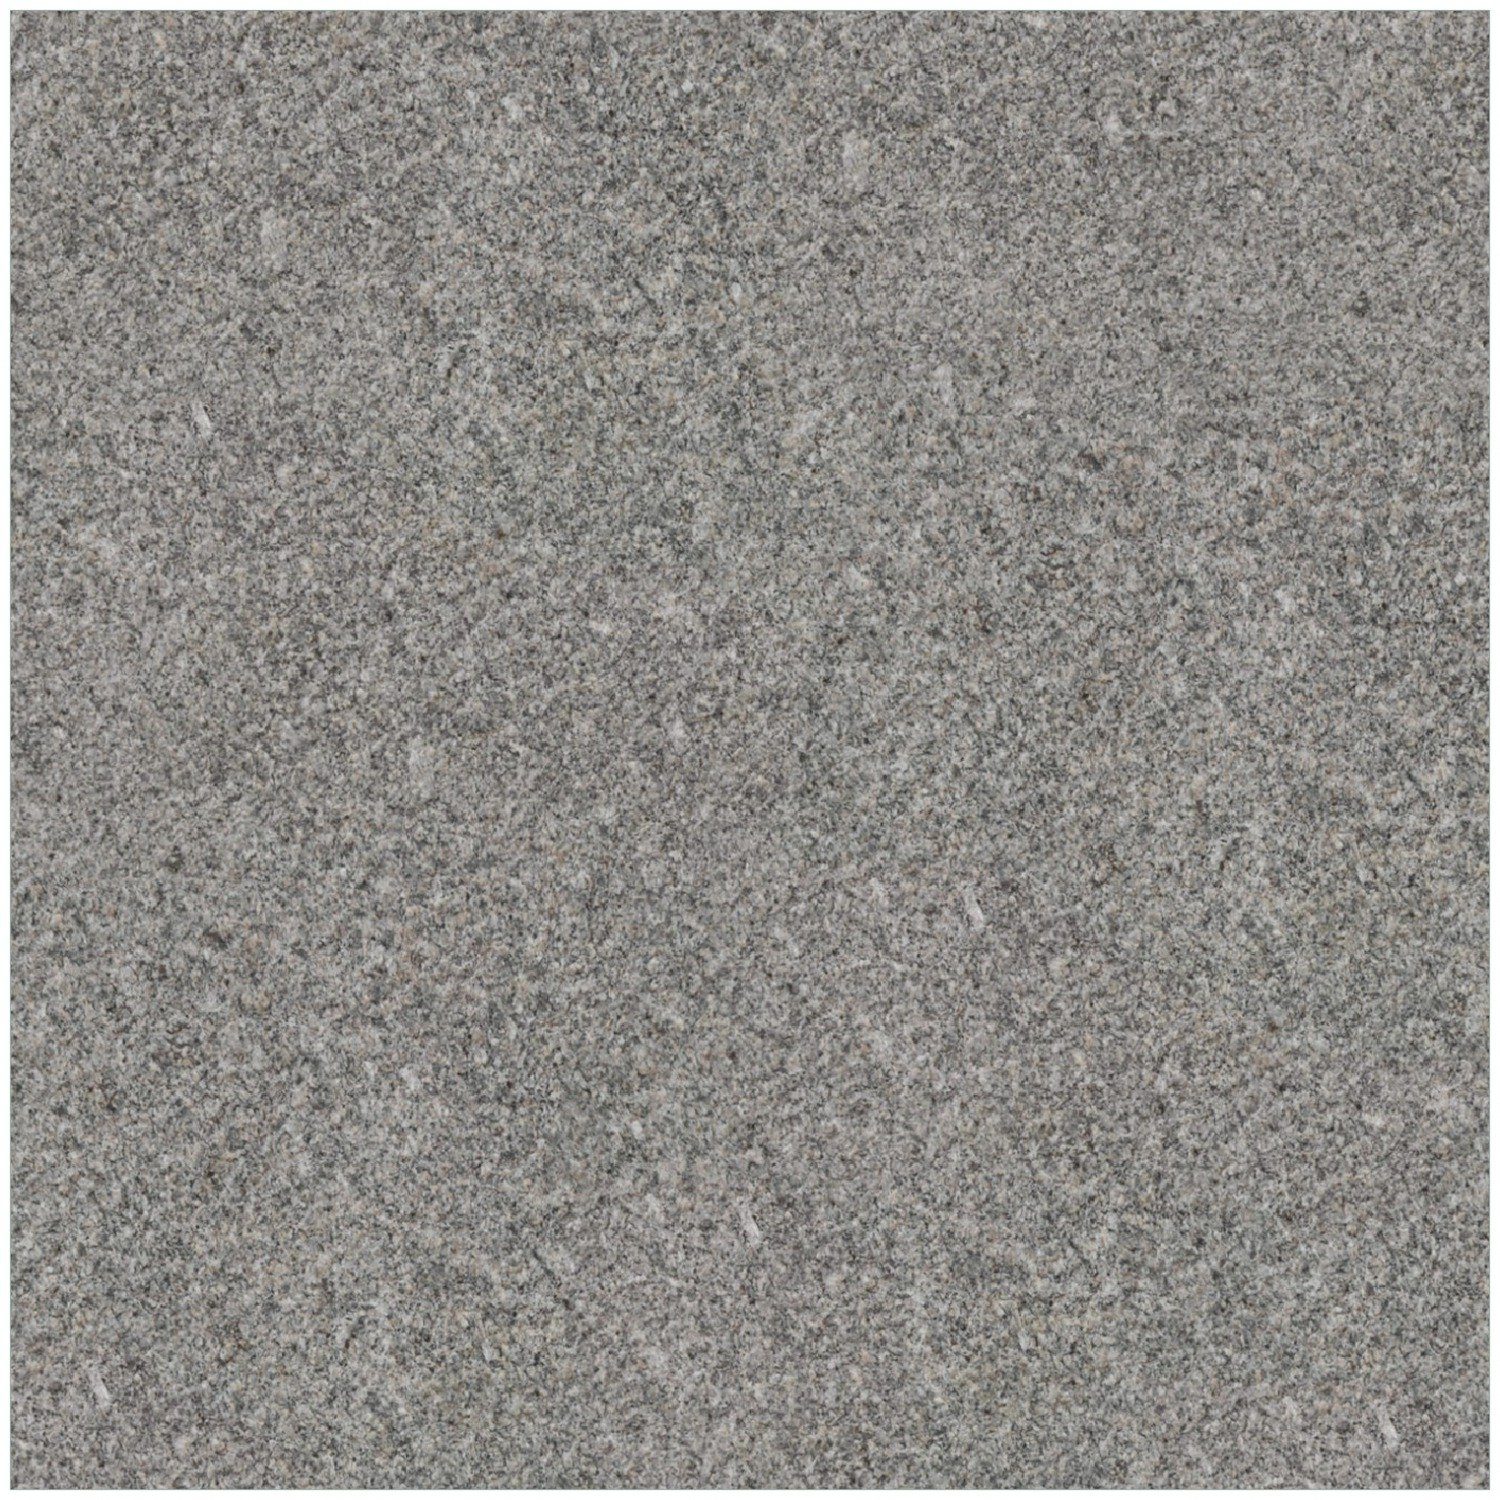 Wallario Memoboard Muster grauer Marmor Optik -Granit - marmoriert